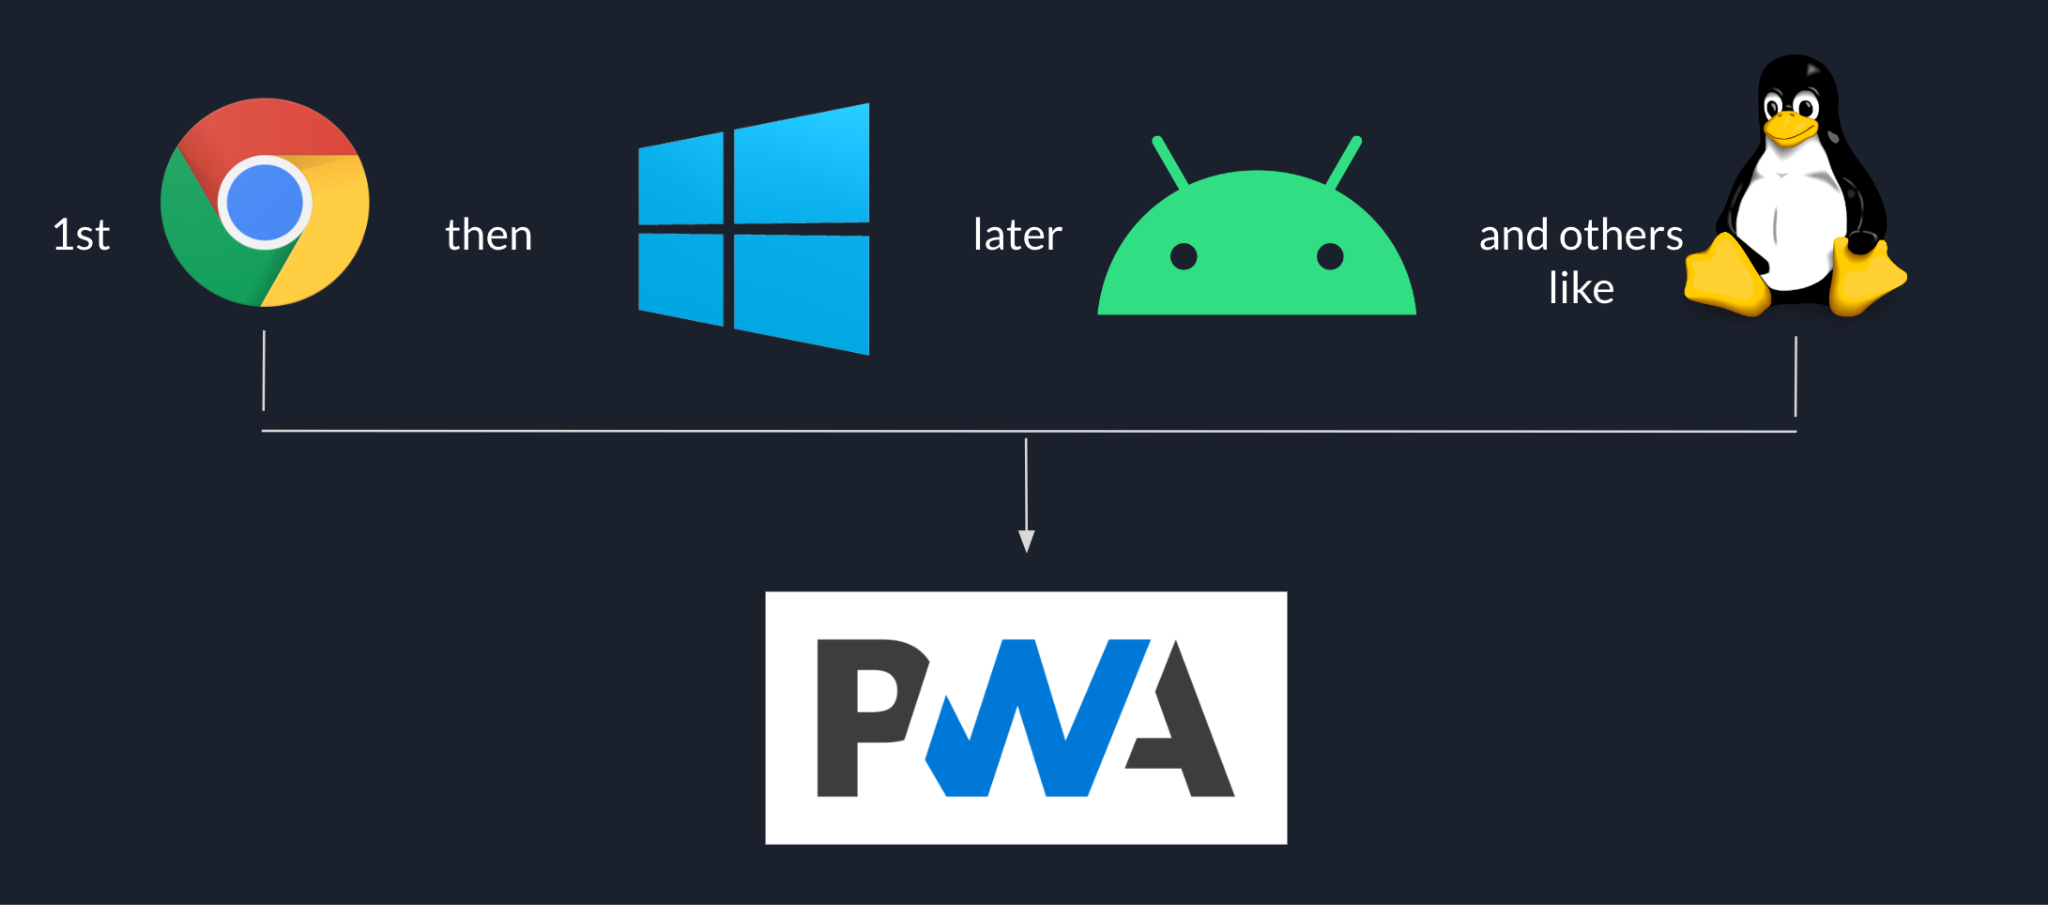 Goodnote 以 PWA 為基礎，推出依序為 Chrome、Windows、Android 和其他平台 (例如 Linux) 的發布順序。